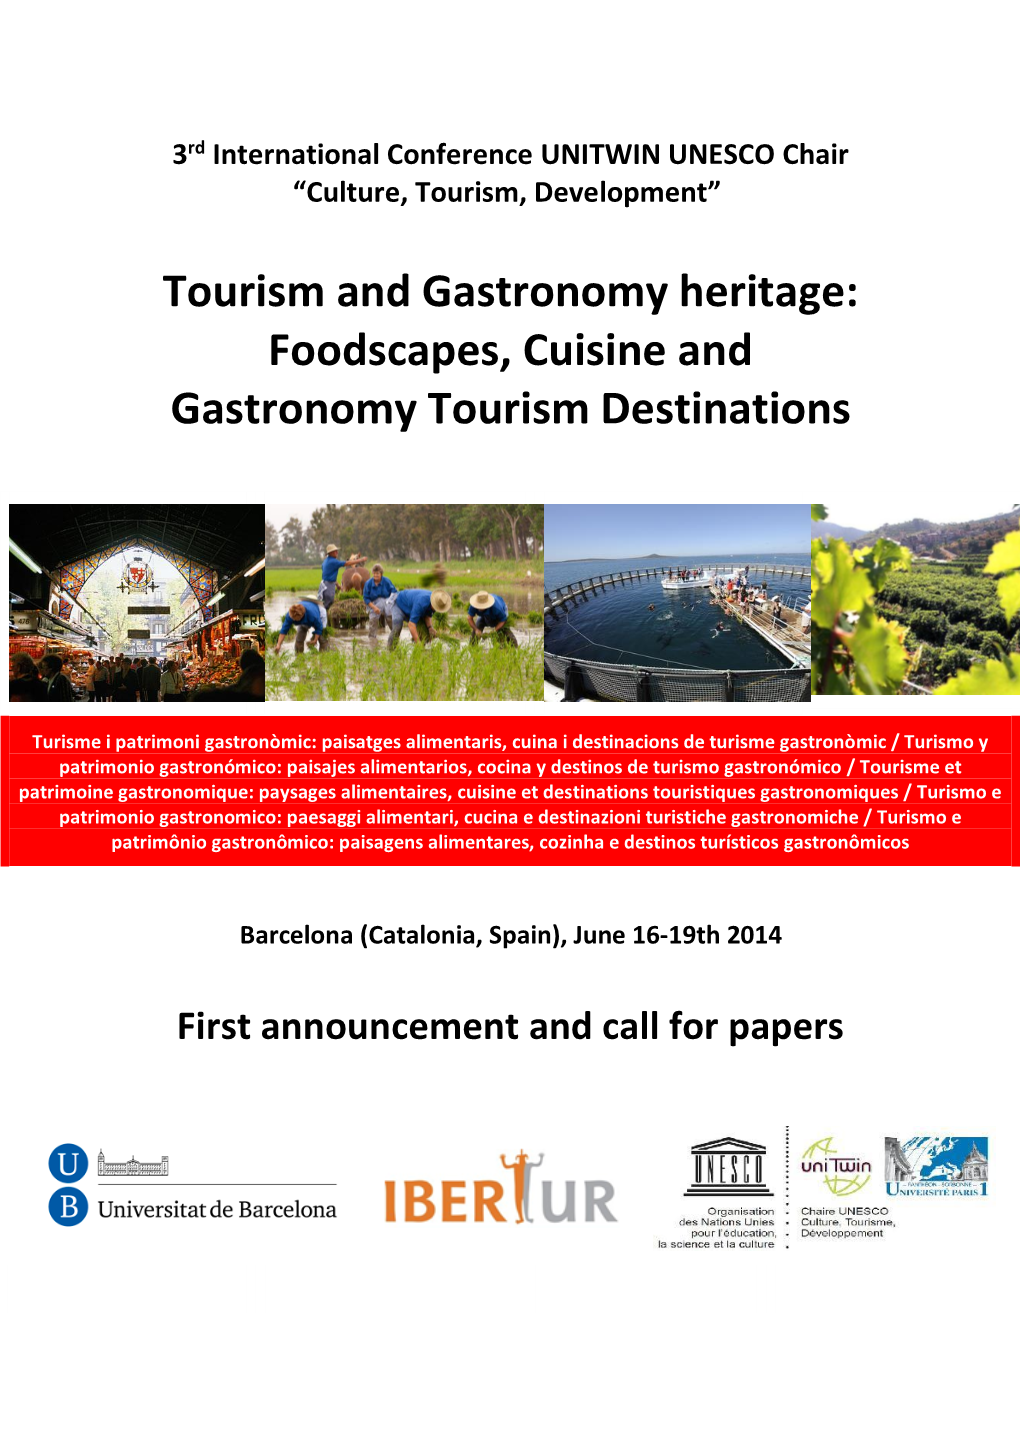 Foodscapes, Cuisine and Gastronomy Tourism Destinations